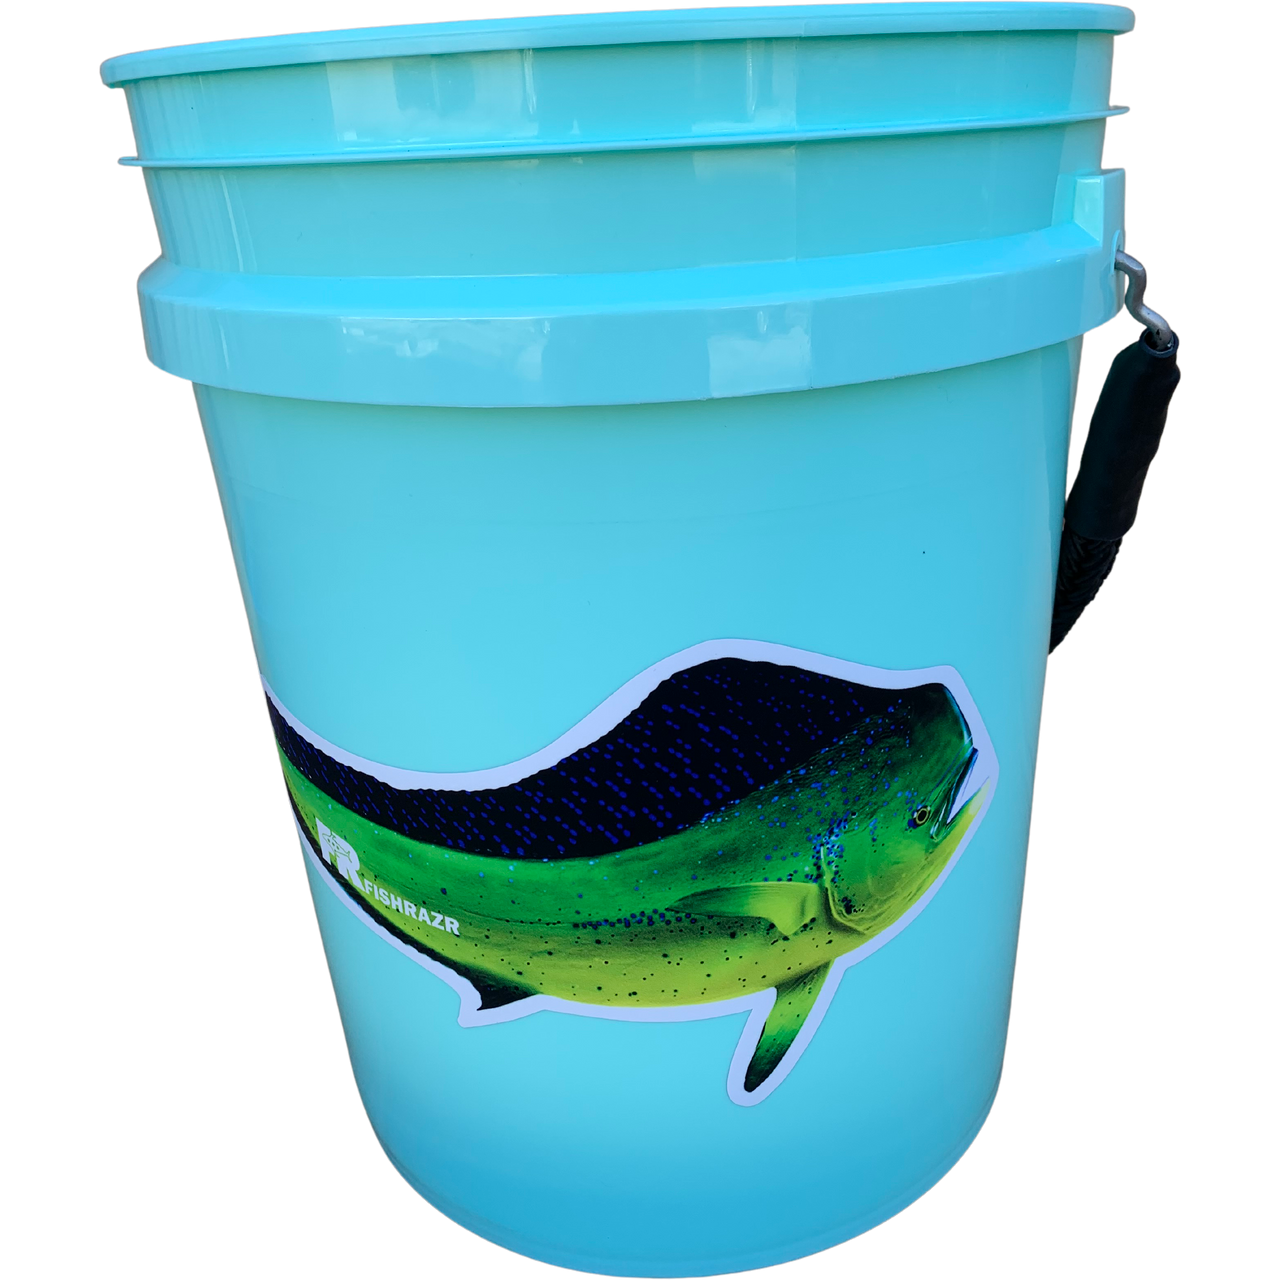 The Fish Bucket